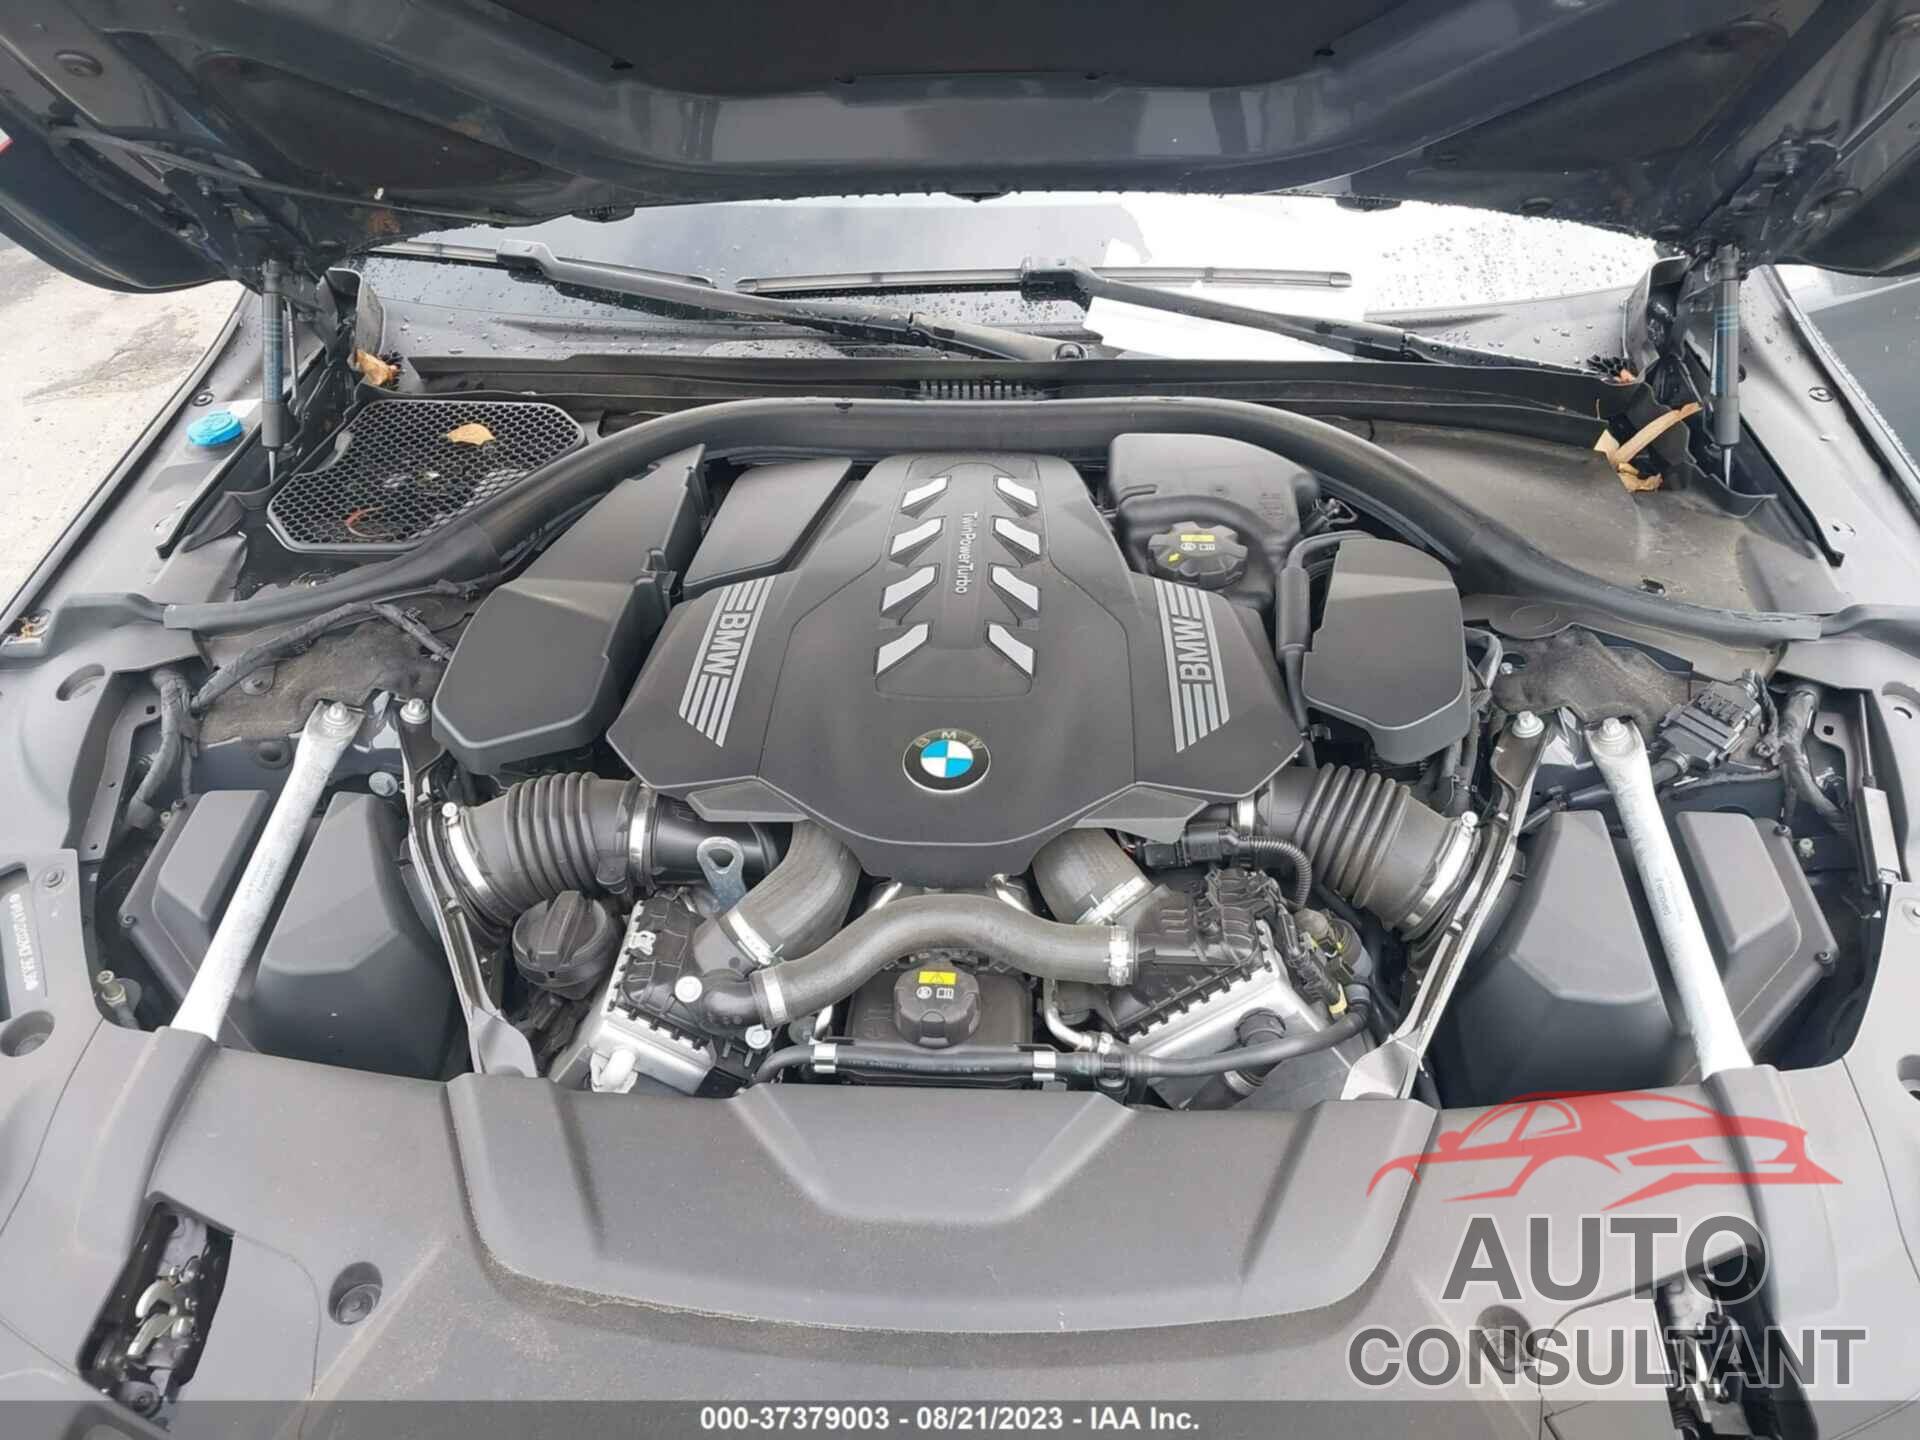 BMW 7 SERIES 2021 - WBA7U2C02MCF35636